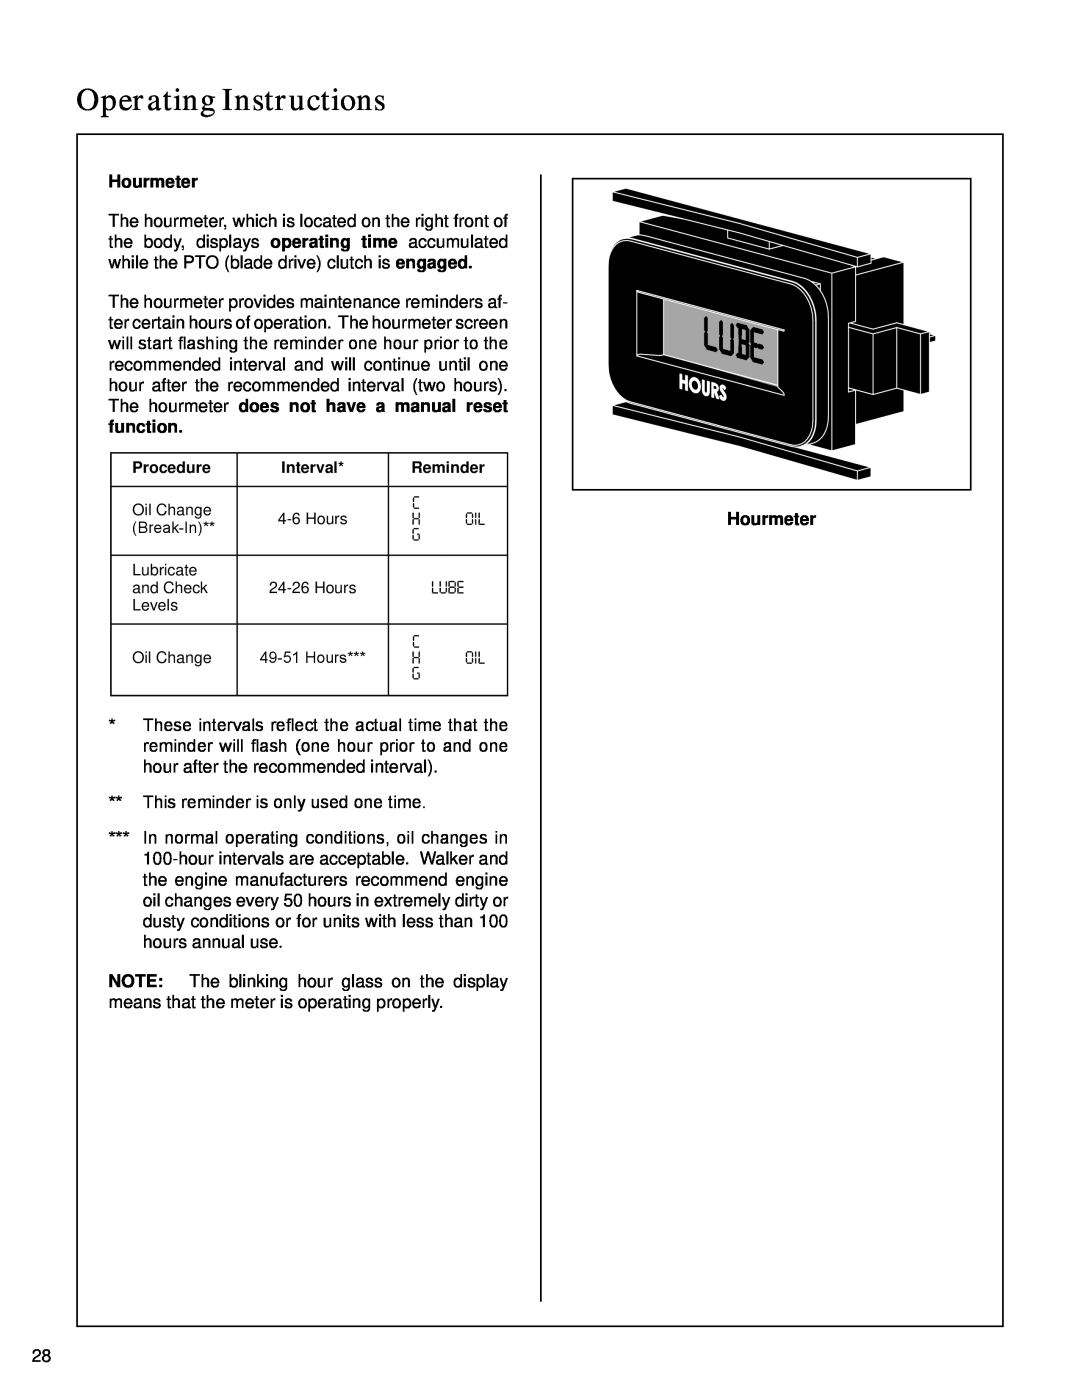 Walker S14 manual Hourmeter, Operating Instructions 